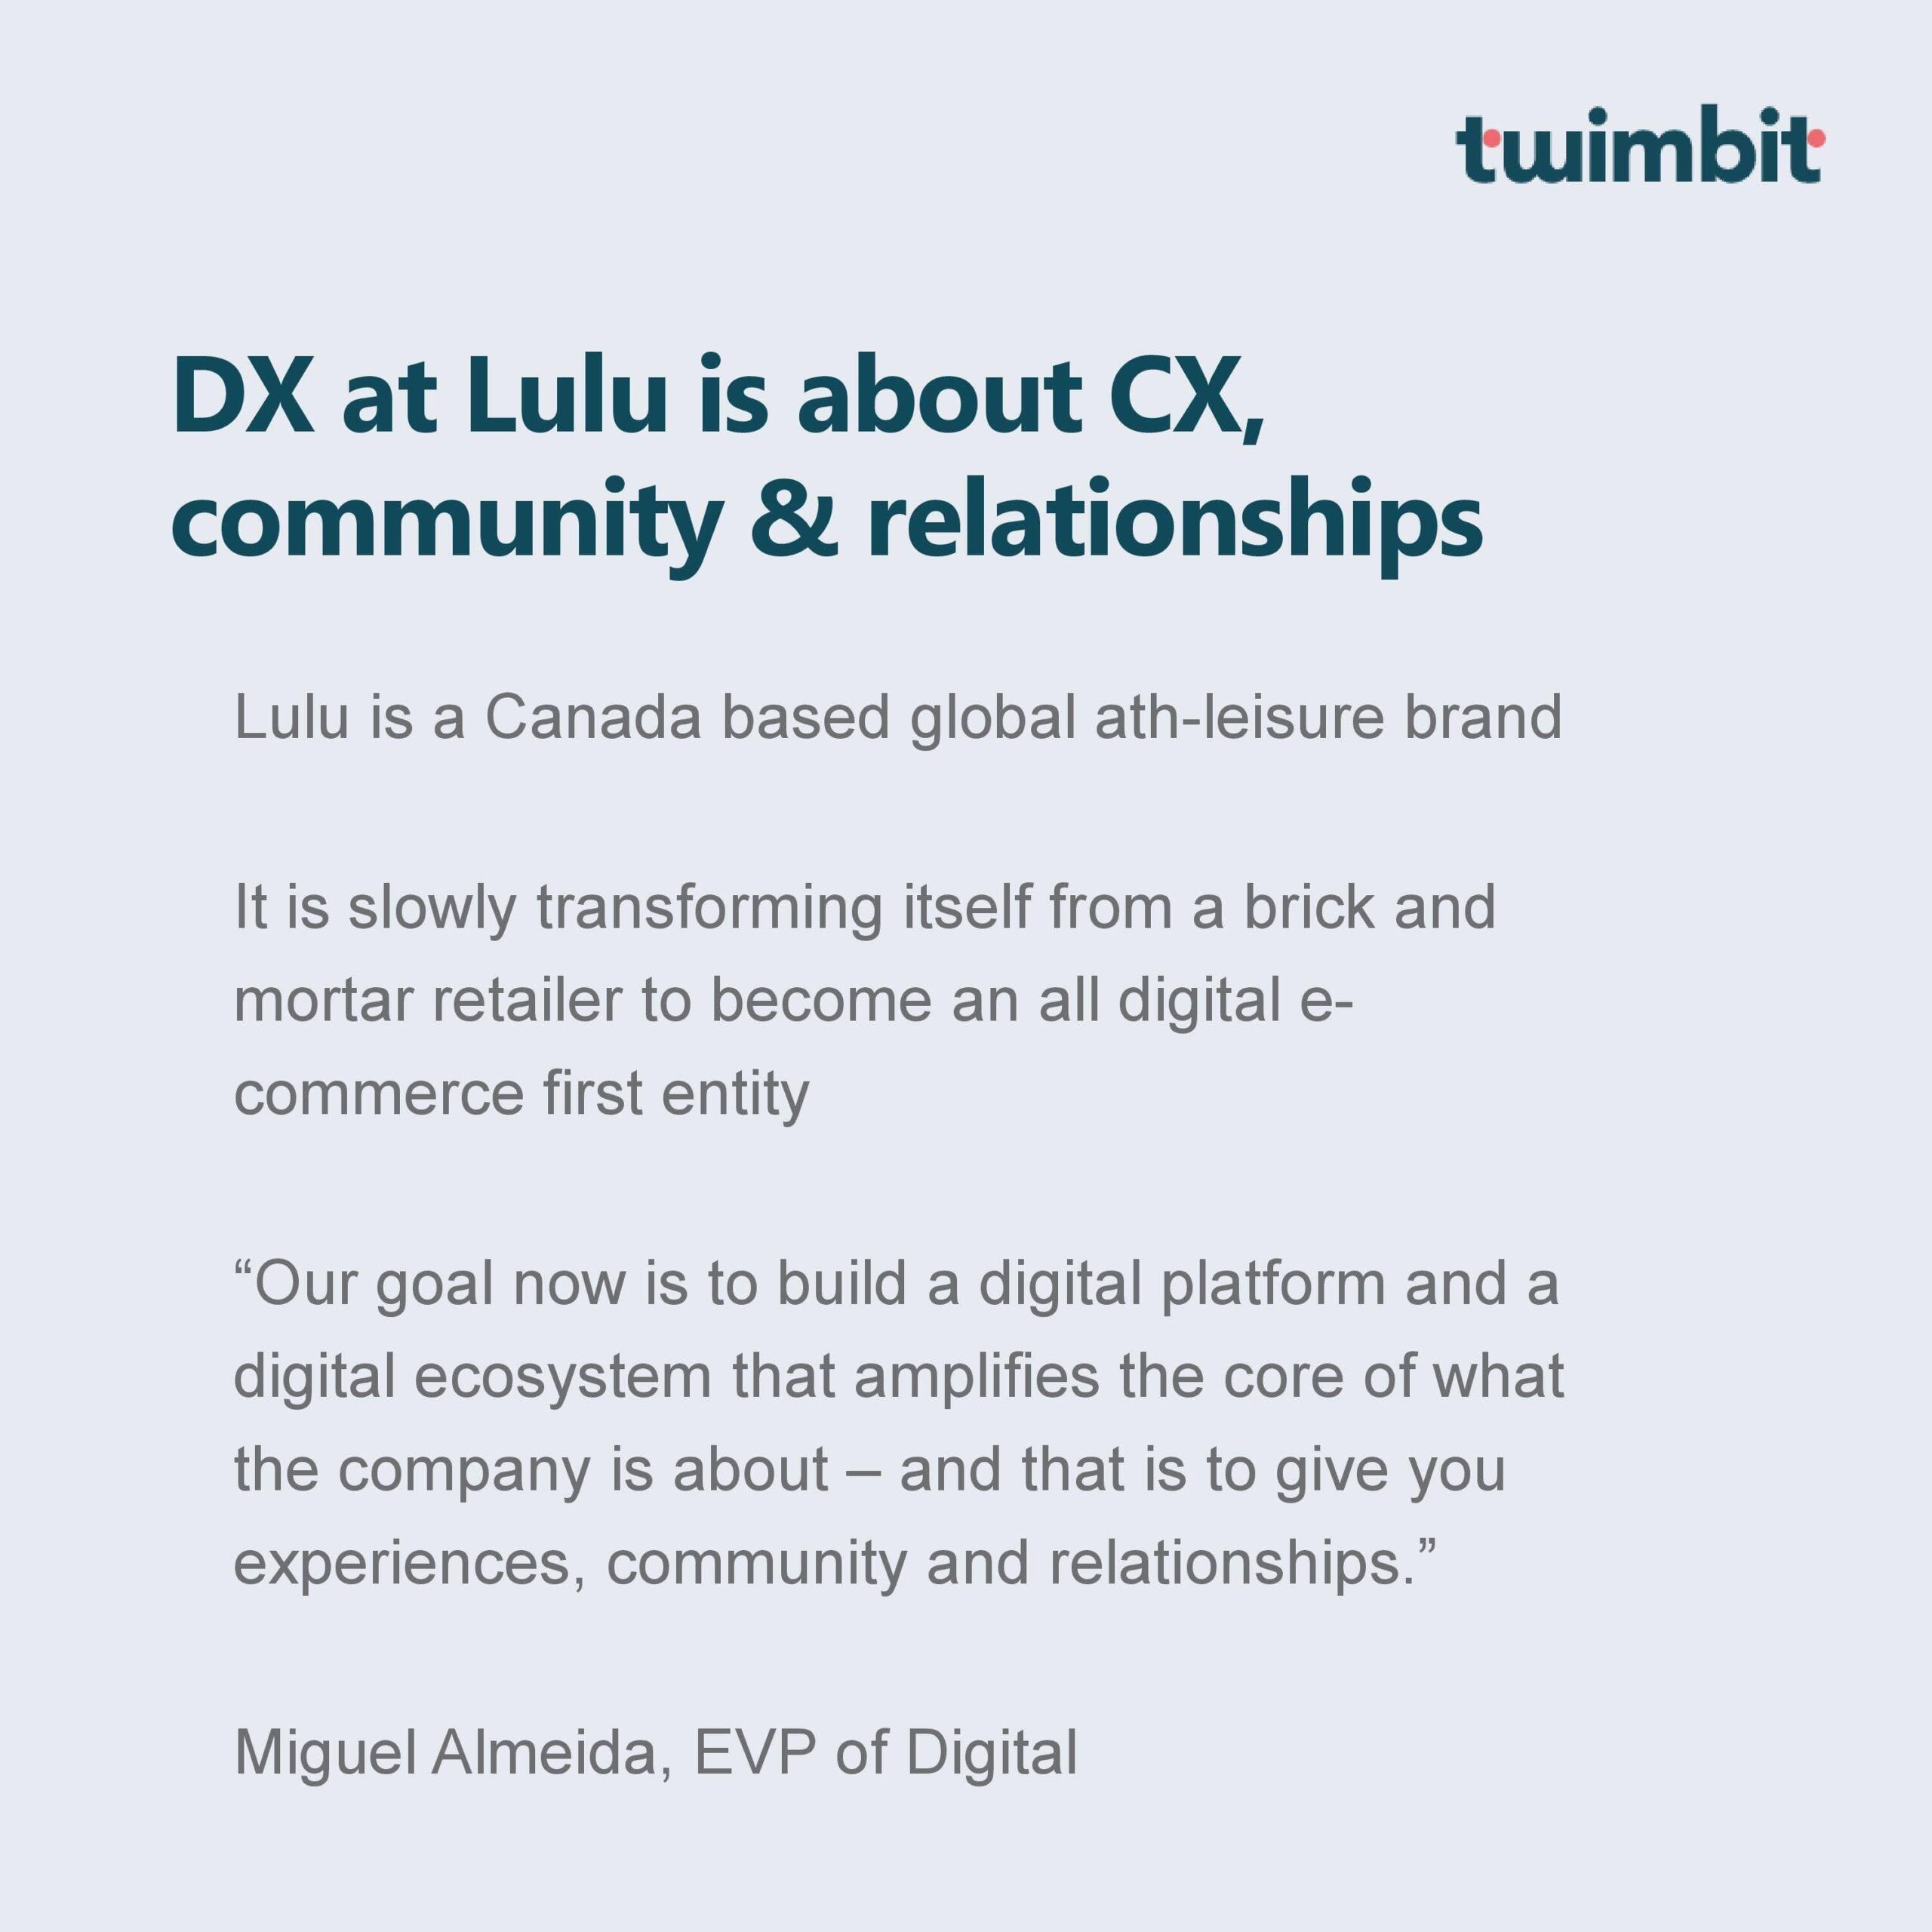 Lululemon Athletica's digital transformation - all about CX - Twimbit